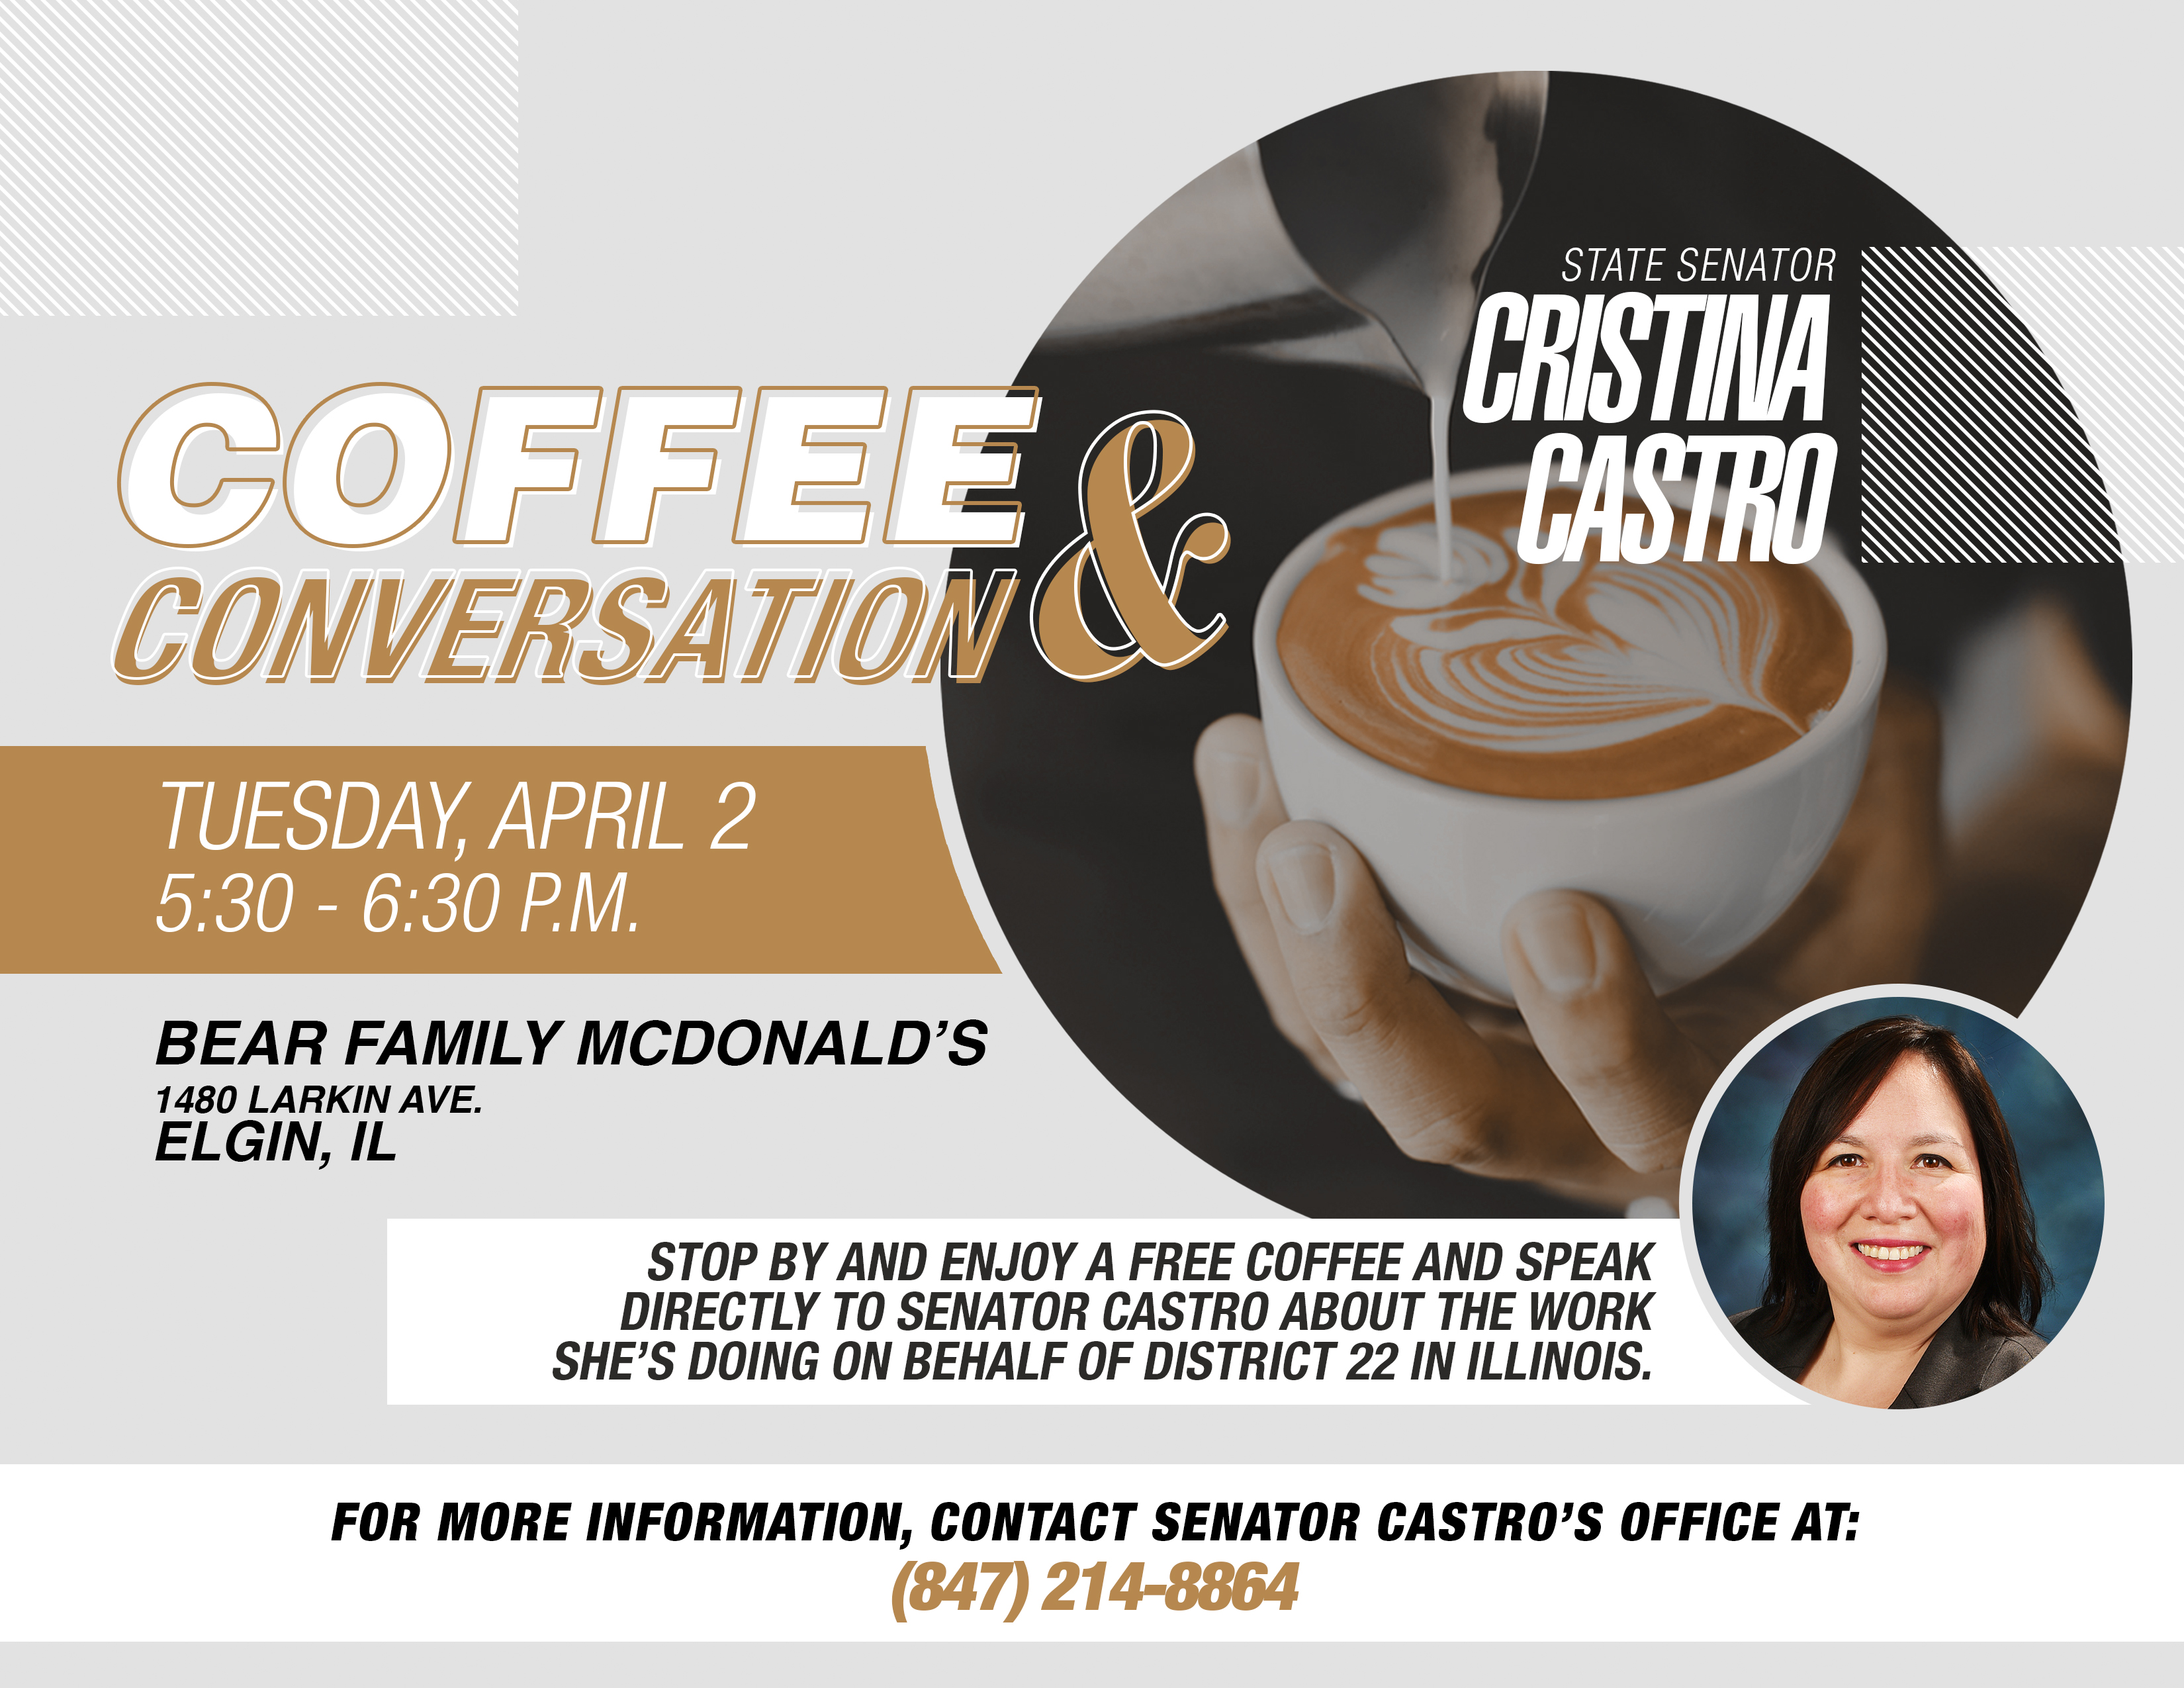 Join State Senator Cristina Castro for coffee and conversation